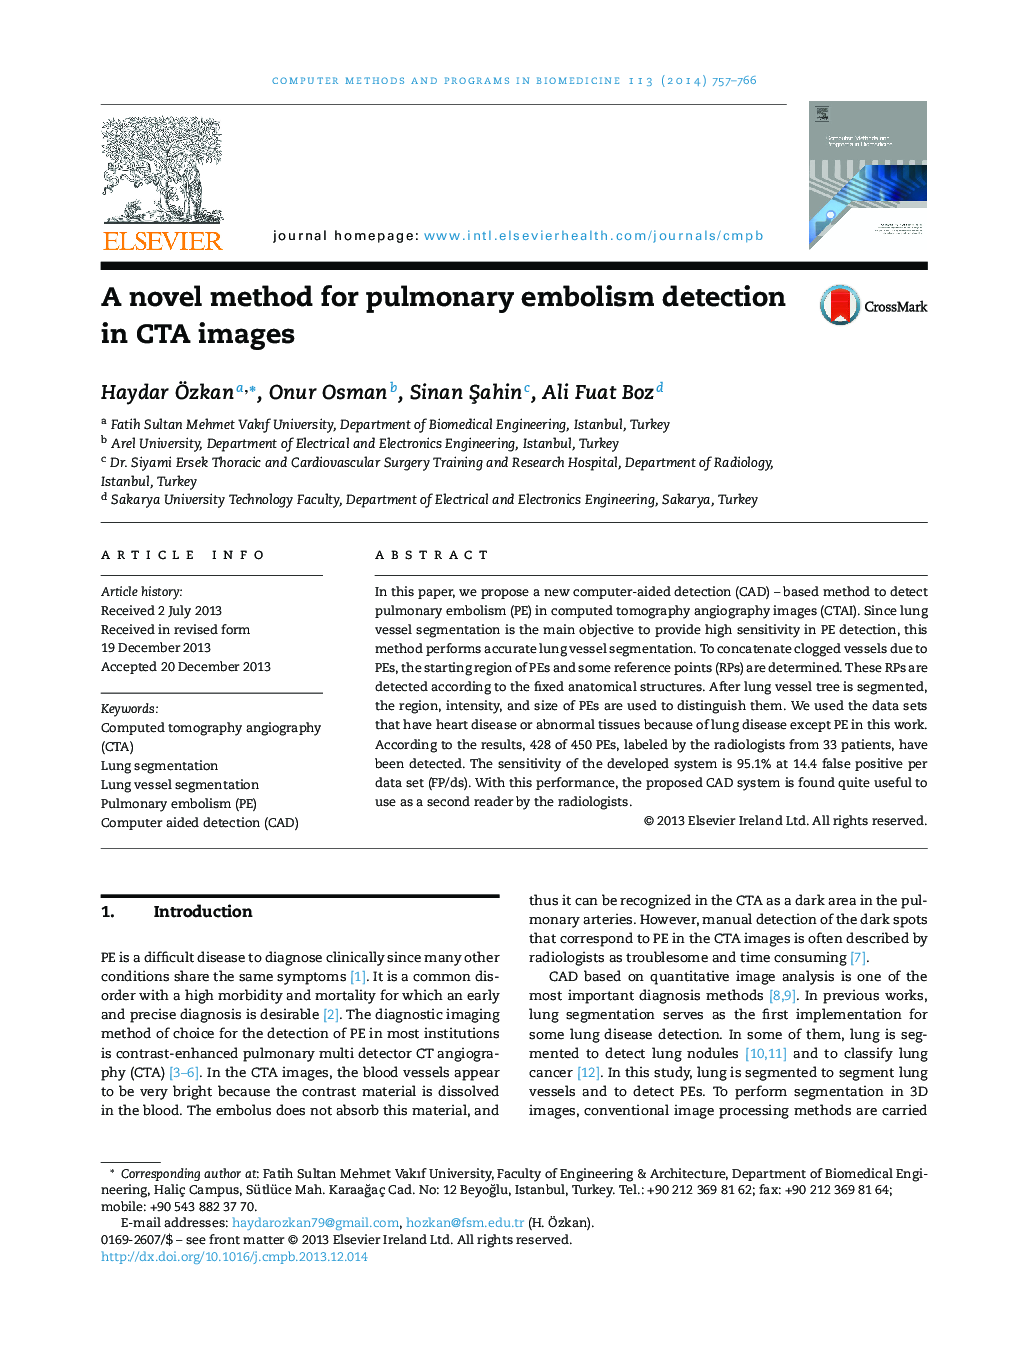 A novel method for pulmonary embolism detection in CTA images